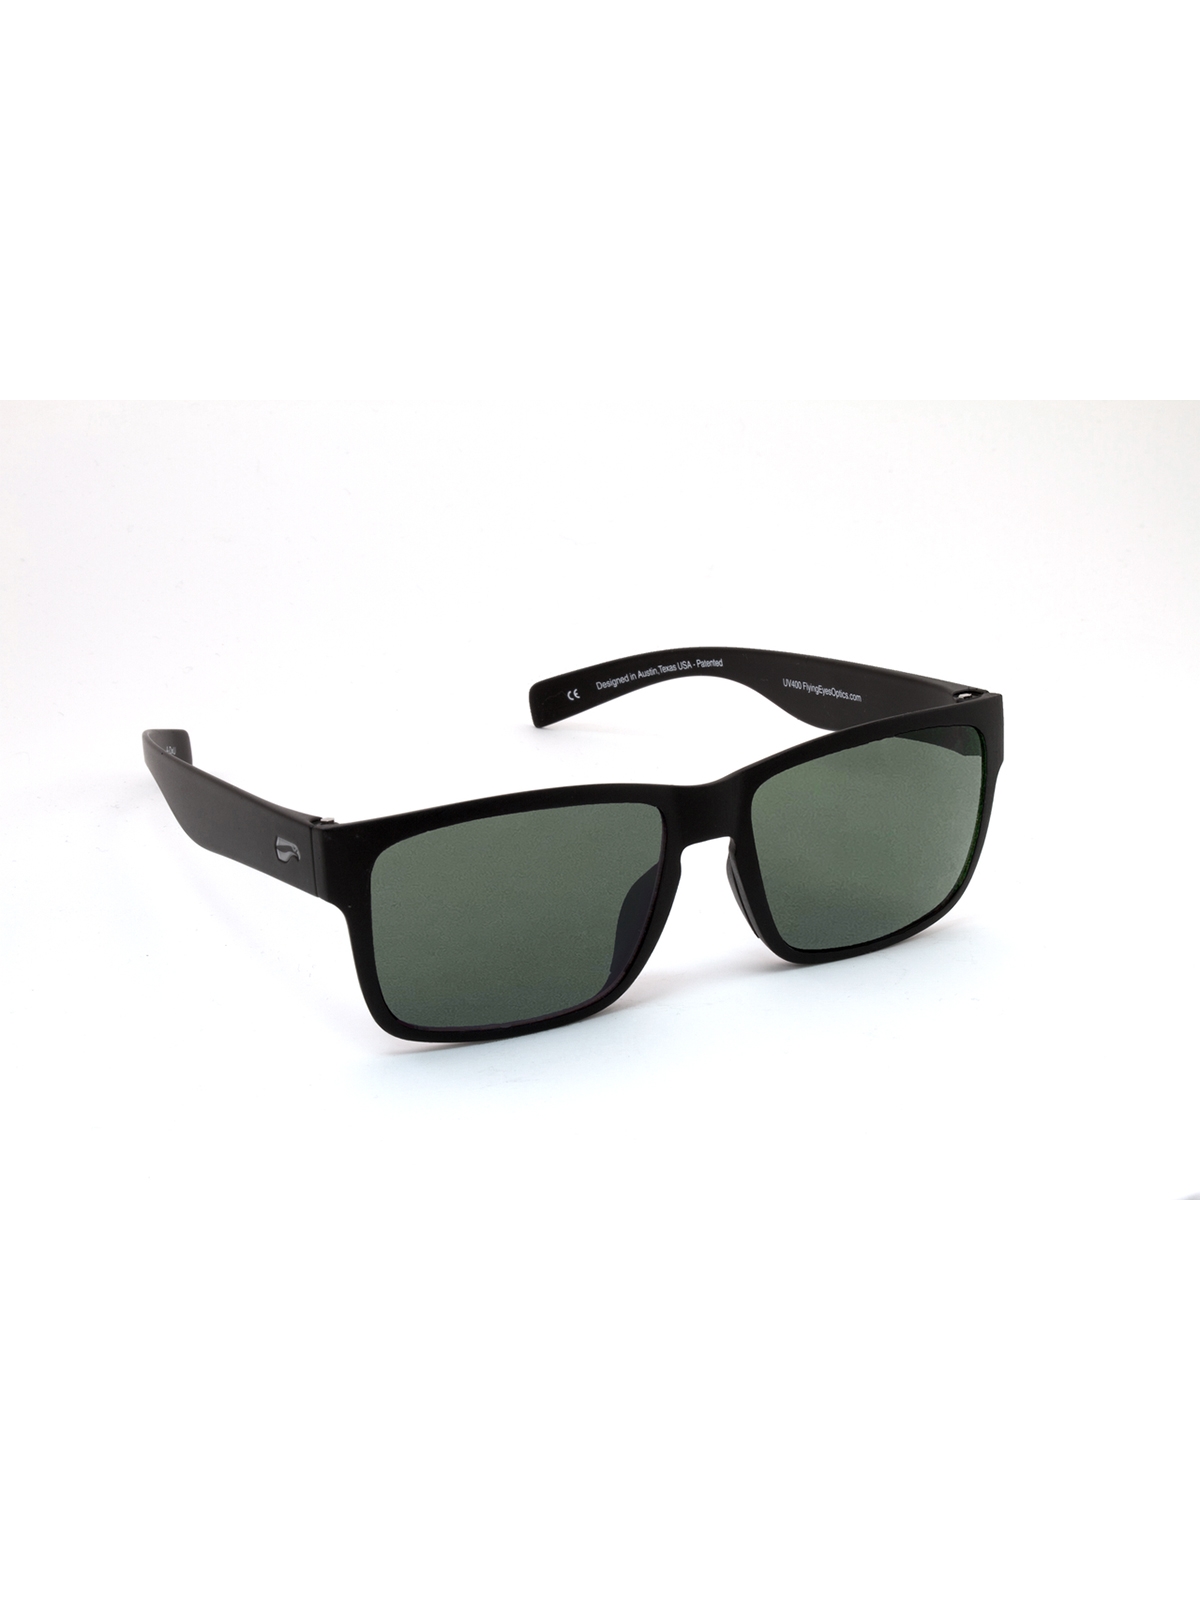 Flying Eyes Sonnenbrille Osprey - Rahmen matt schwarz, Linsen G15 (neutrales Grün)